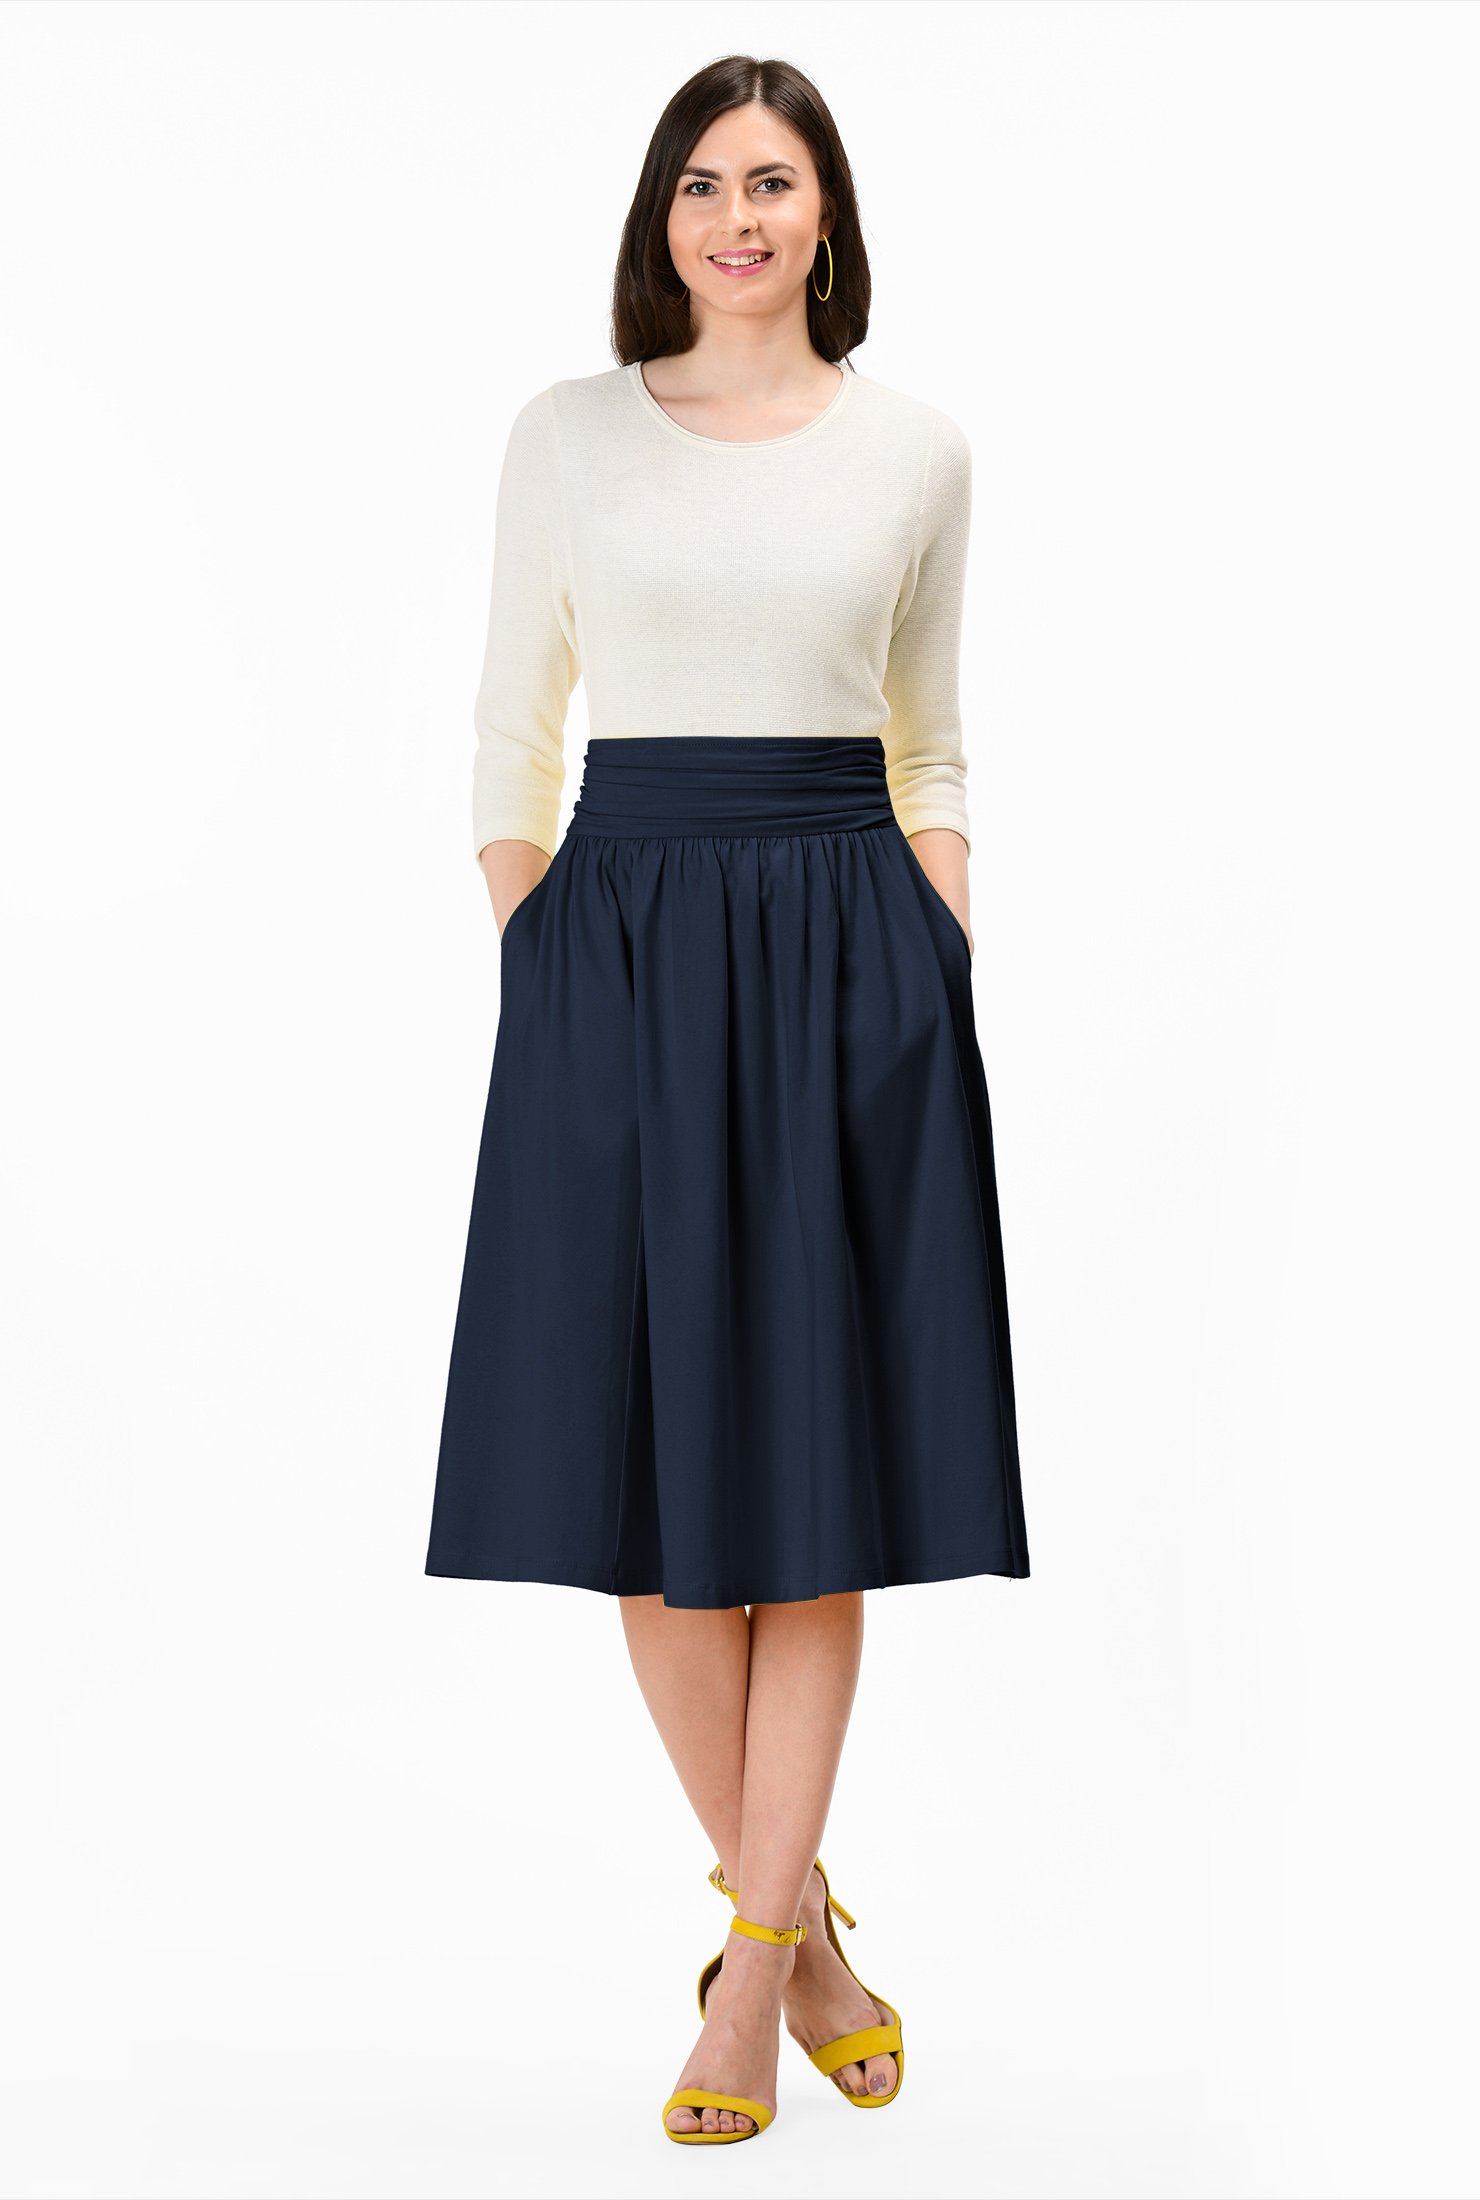 Shop Smocked elastic waist cotton knit skirt | eShakti